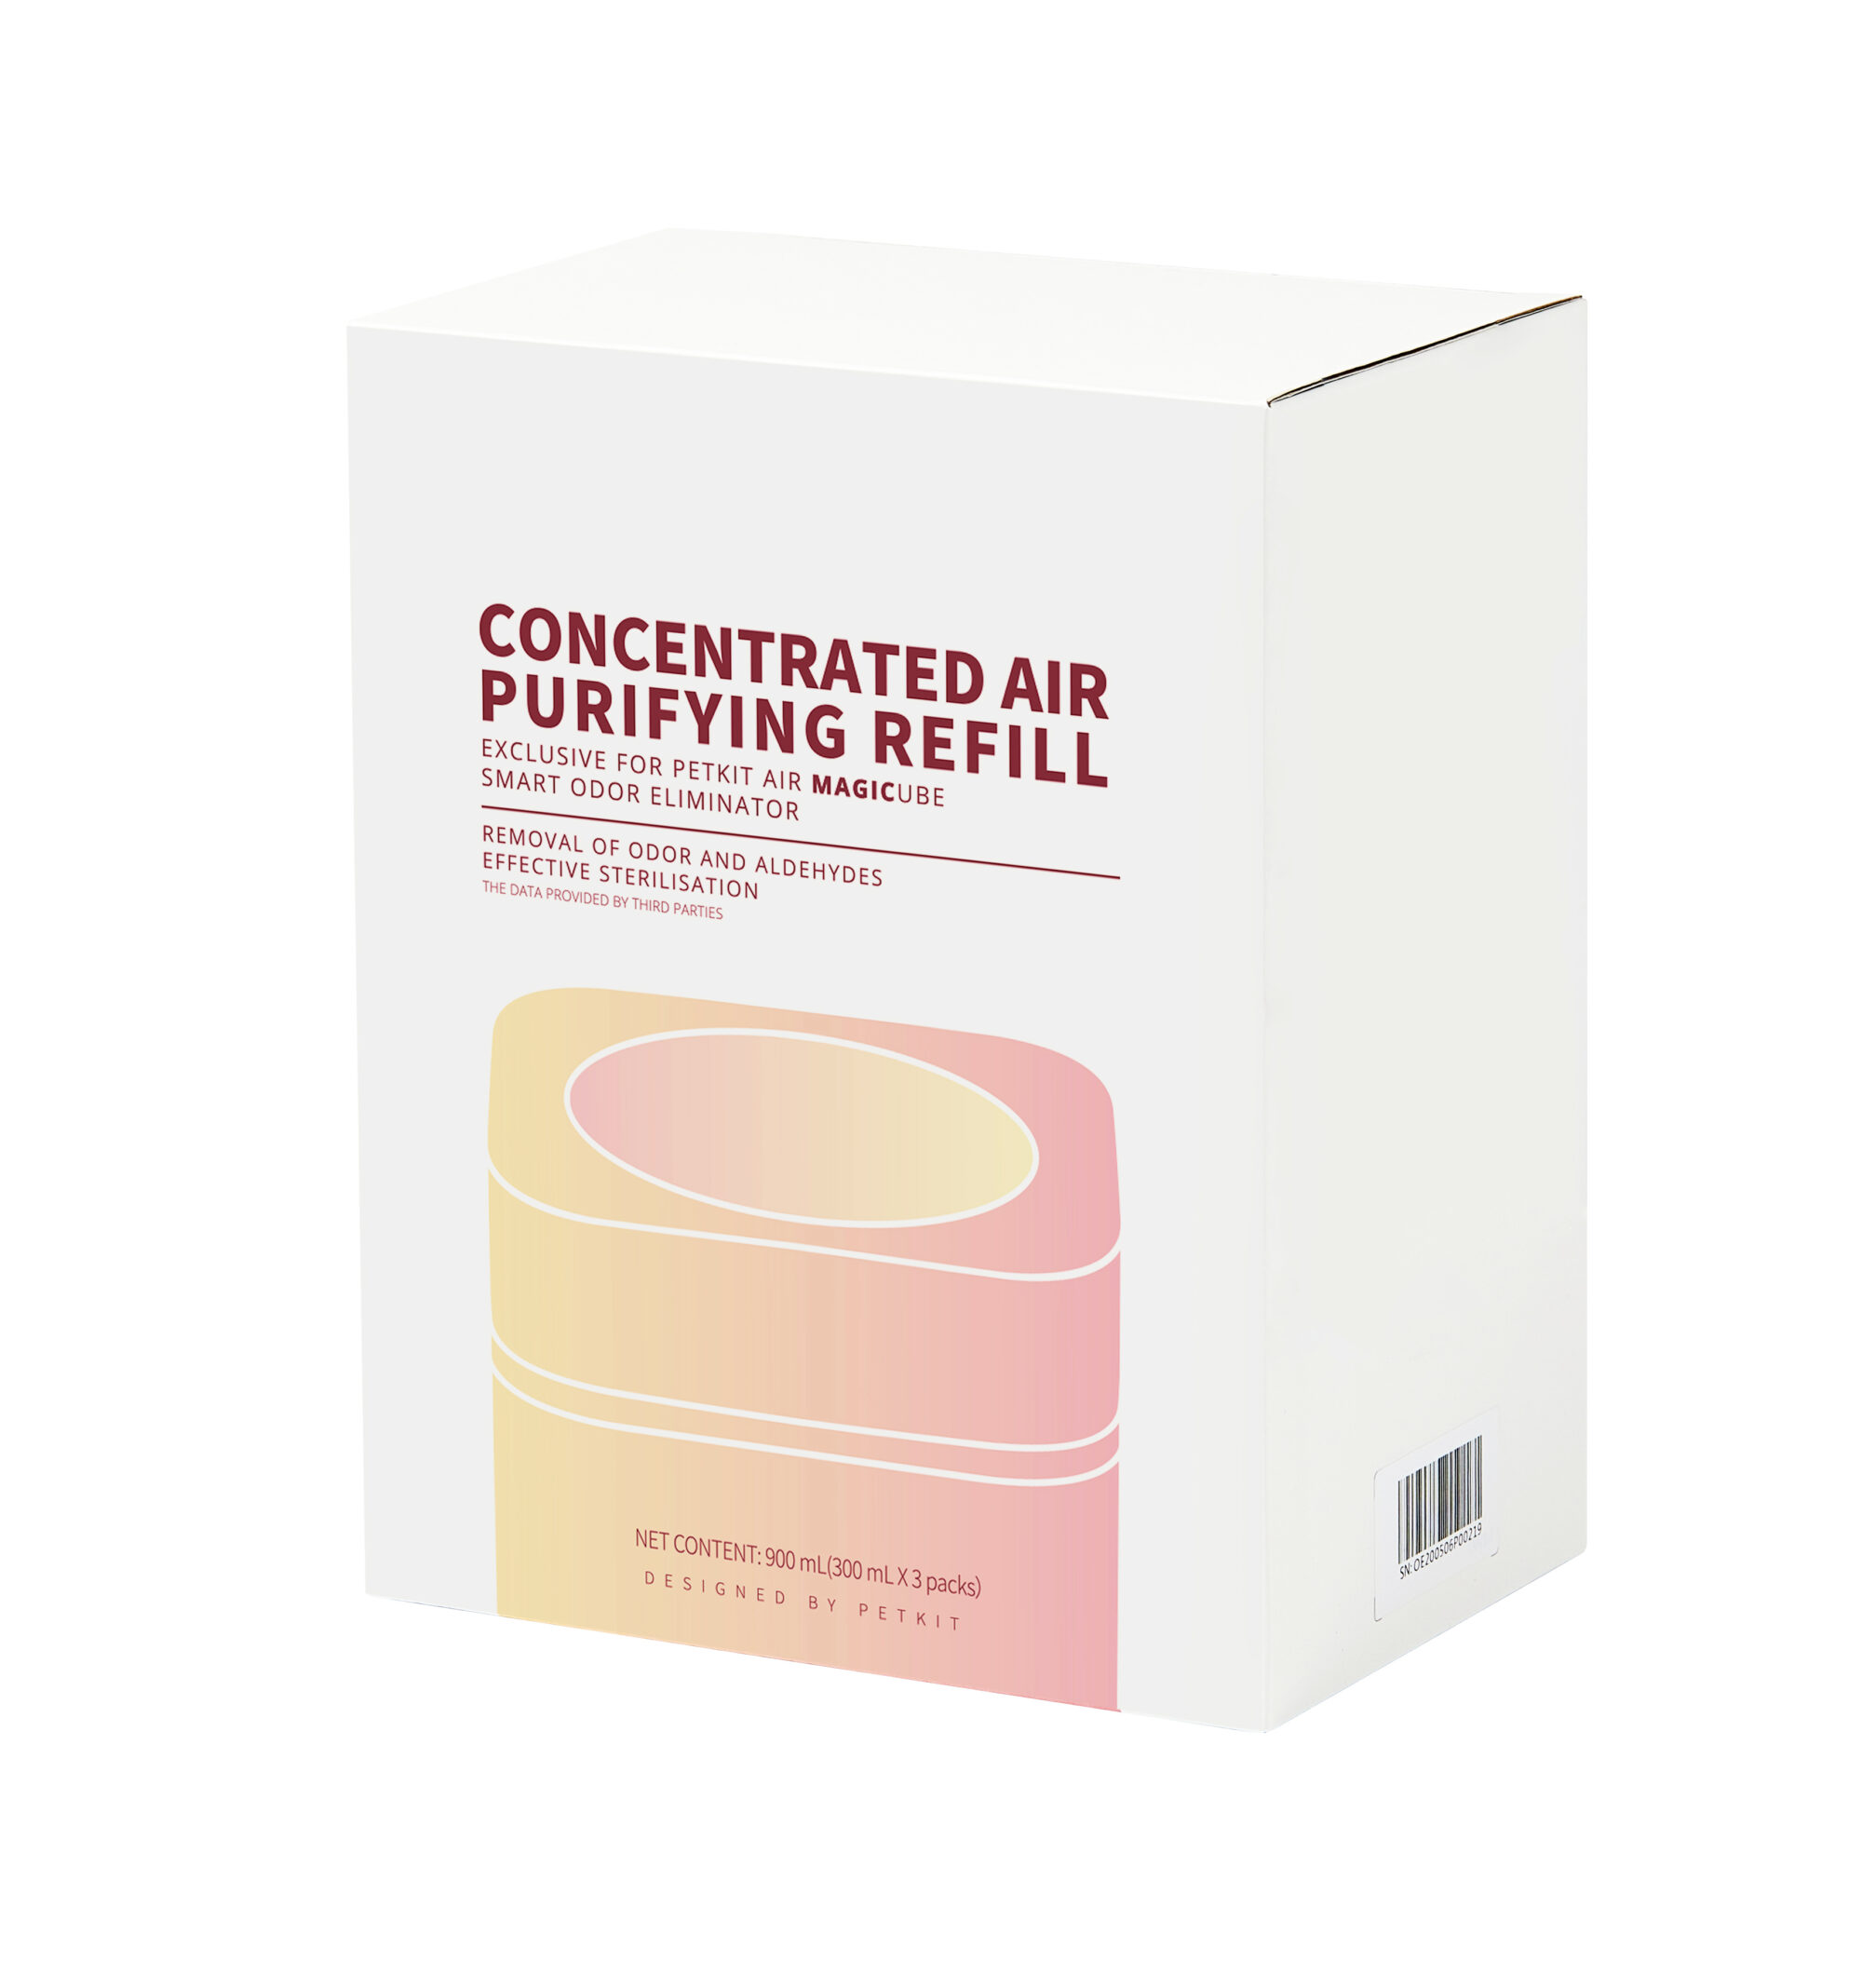 PETKIT Air MagiCube Smart Odor Eliminator Mini Air Purifier with Anti-H1N1 Virus Function